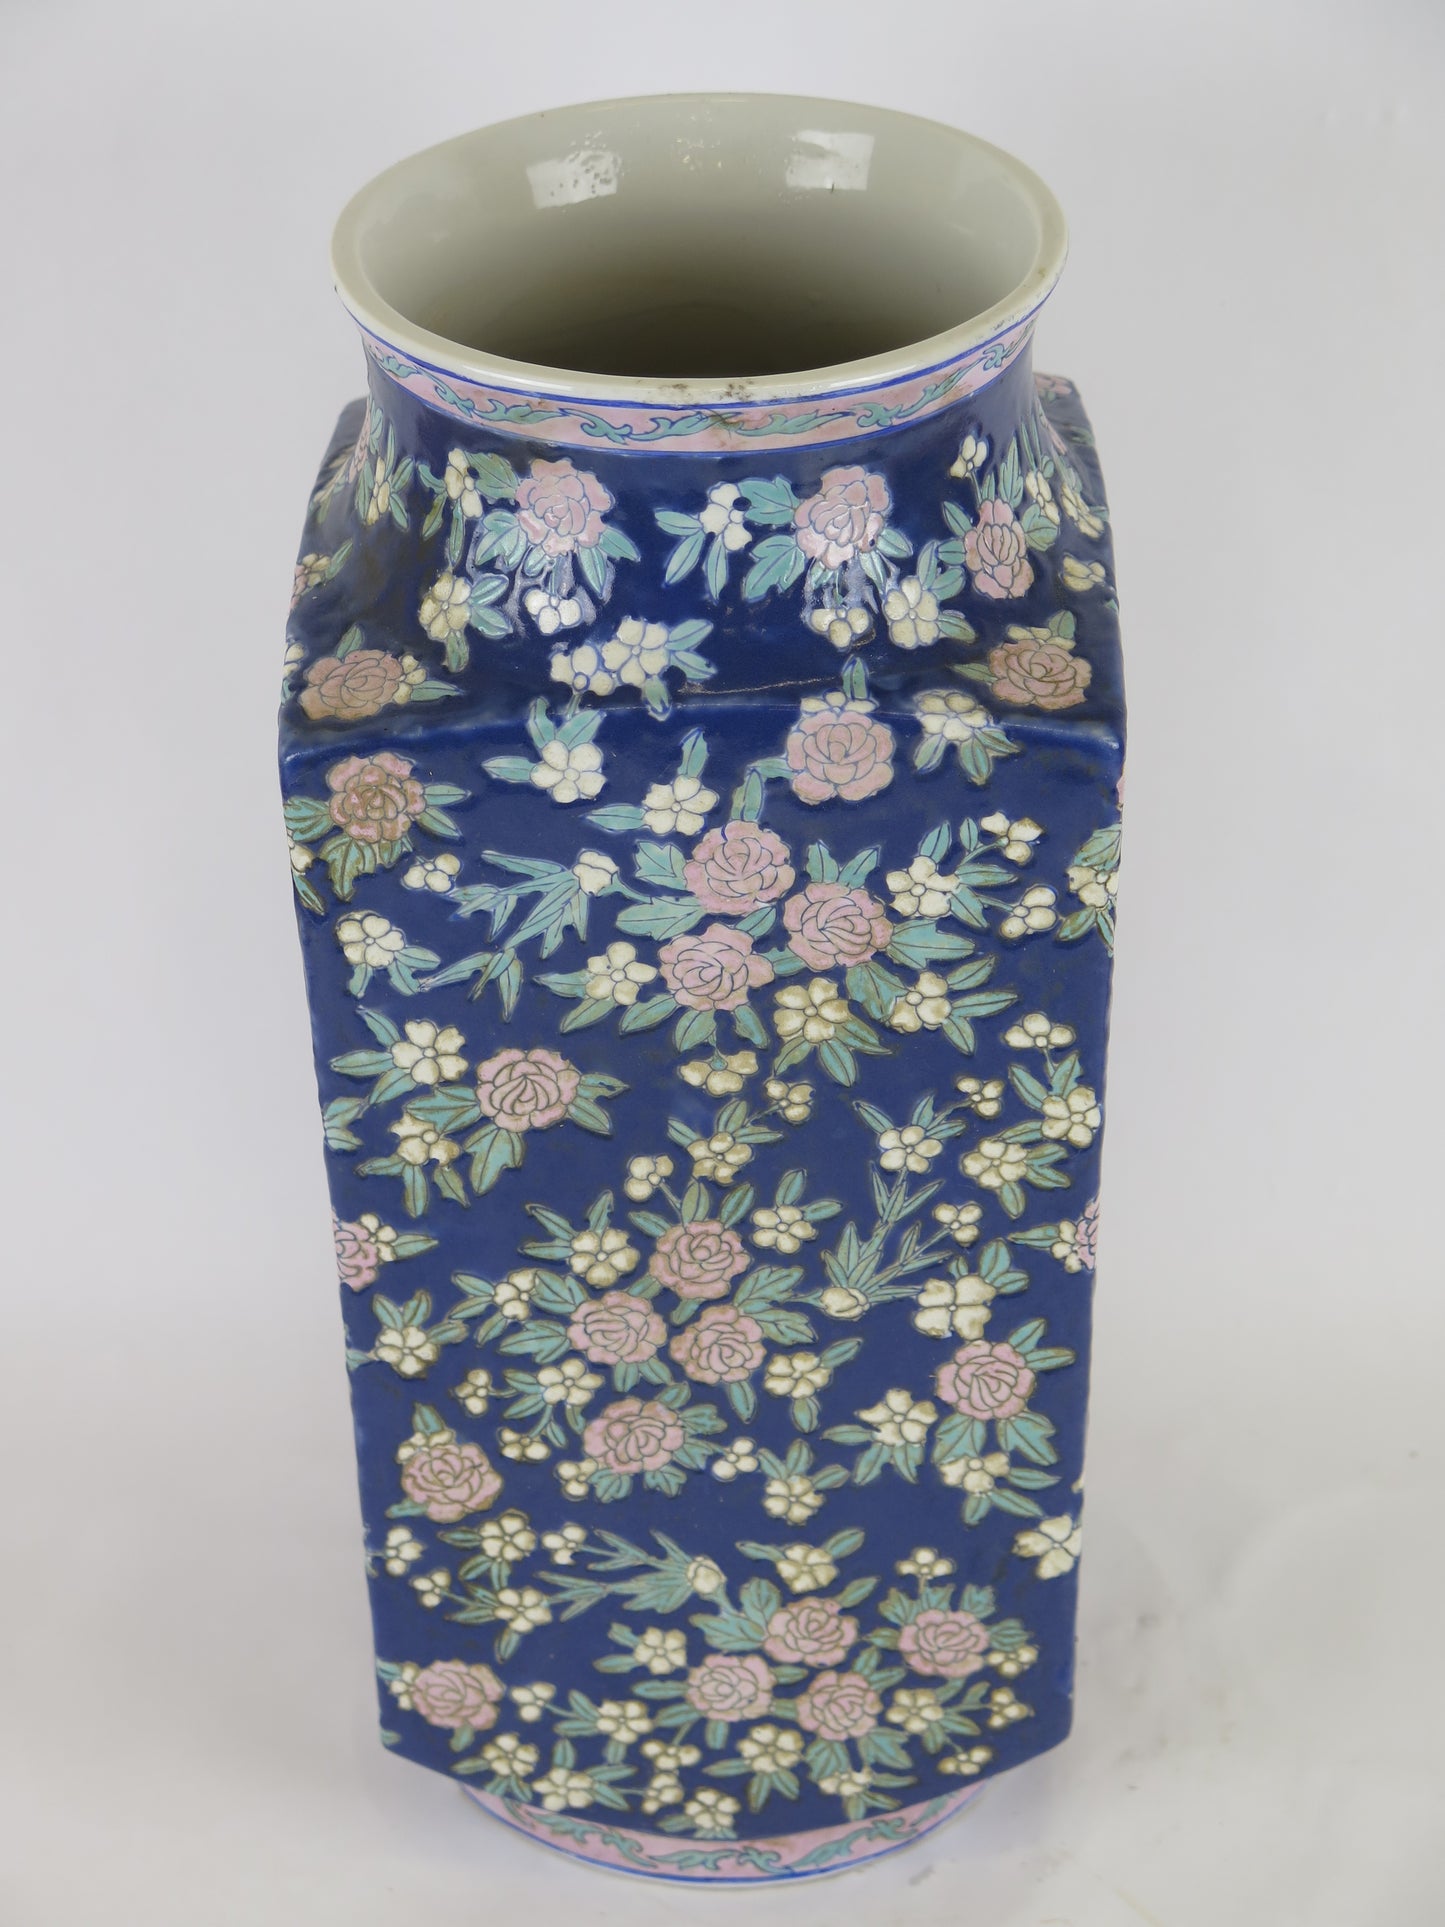 Large hand-painted ceramic vase with flowers Chinese ceramic vase China Asia vintage CM7